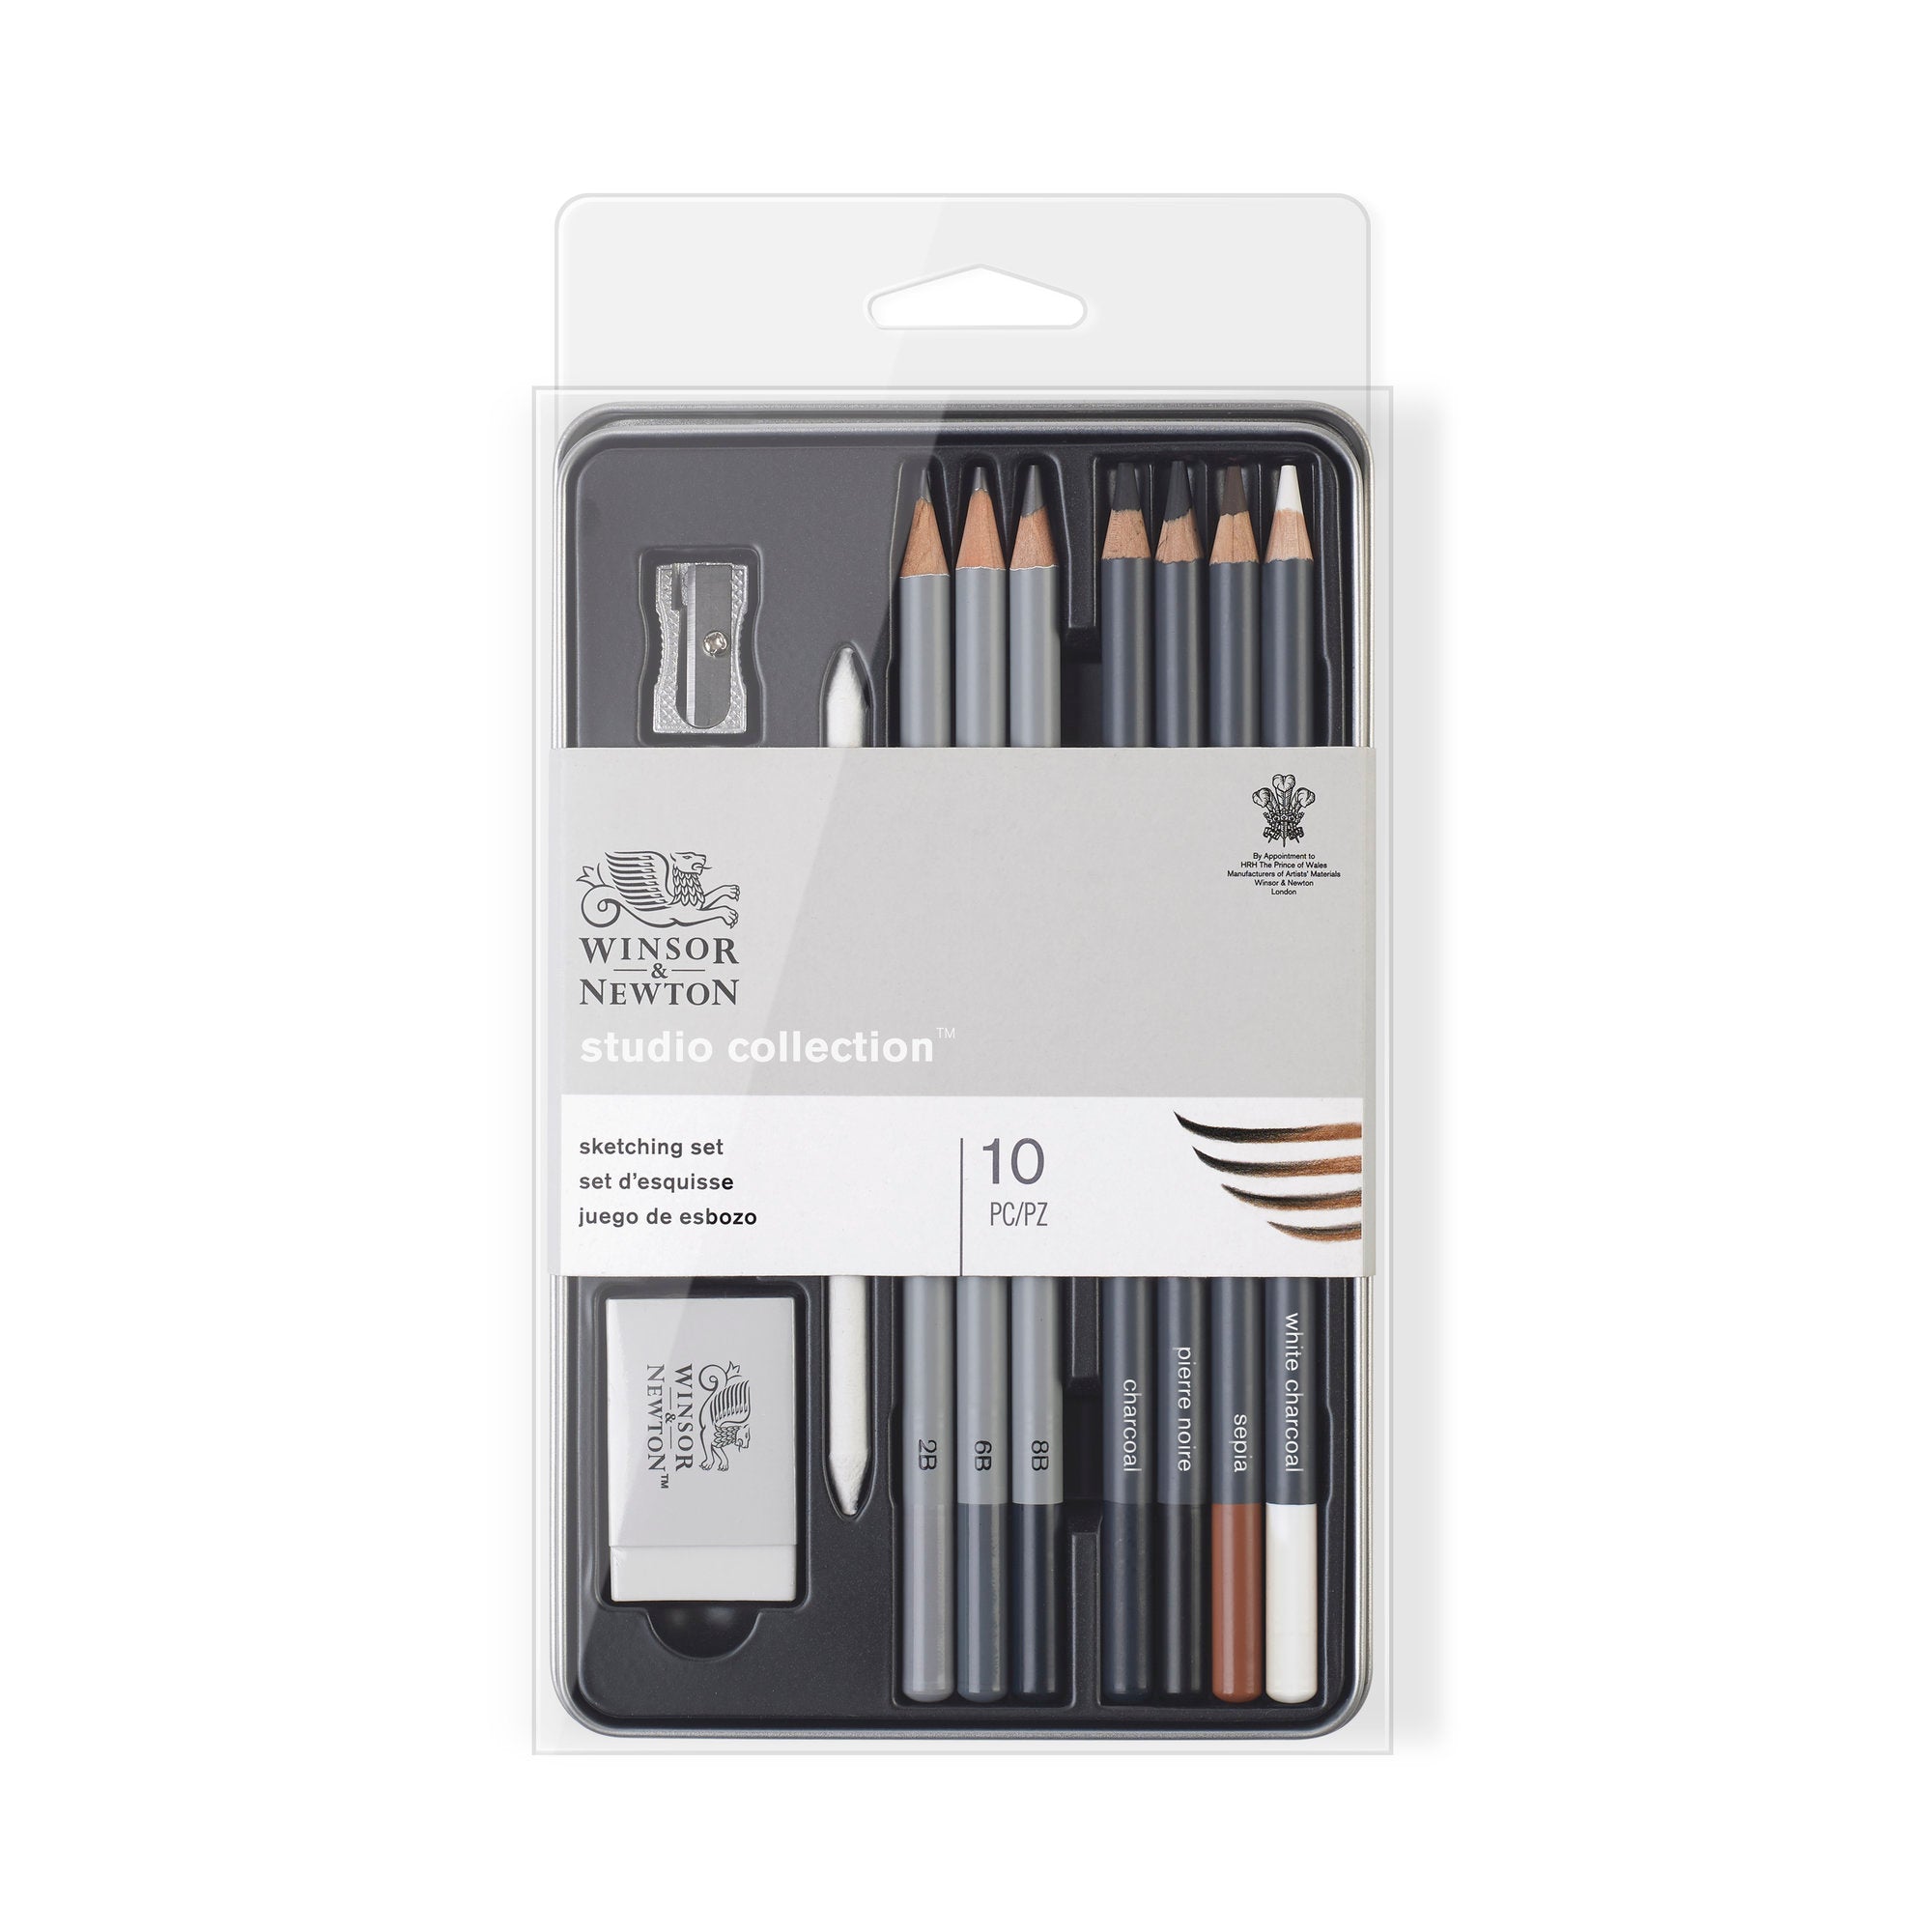 Winsor & Newton Studio Collection Sketching Pencil Set of 10 pieces